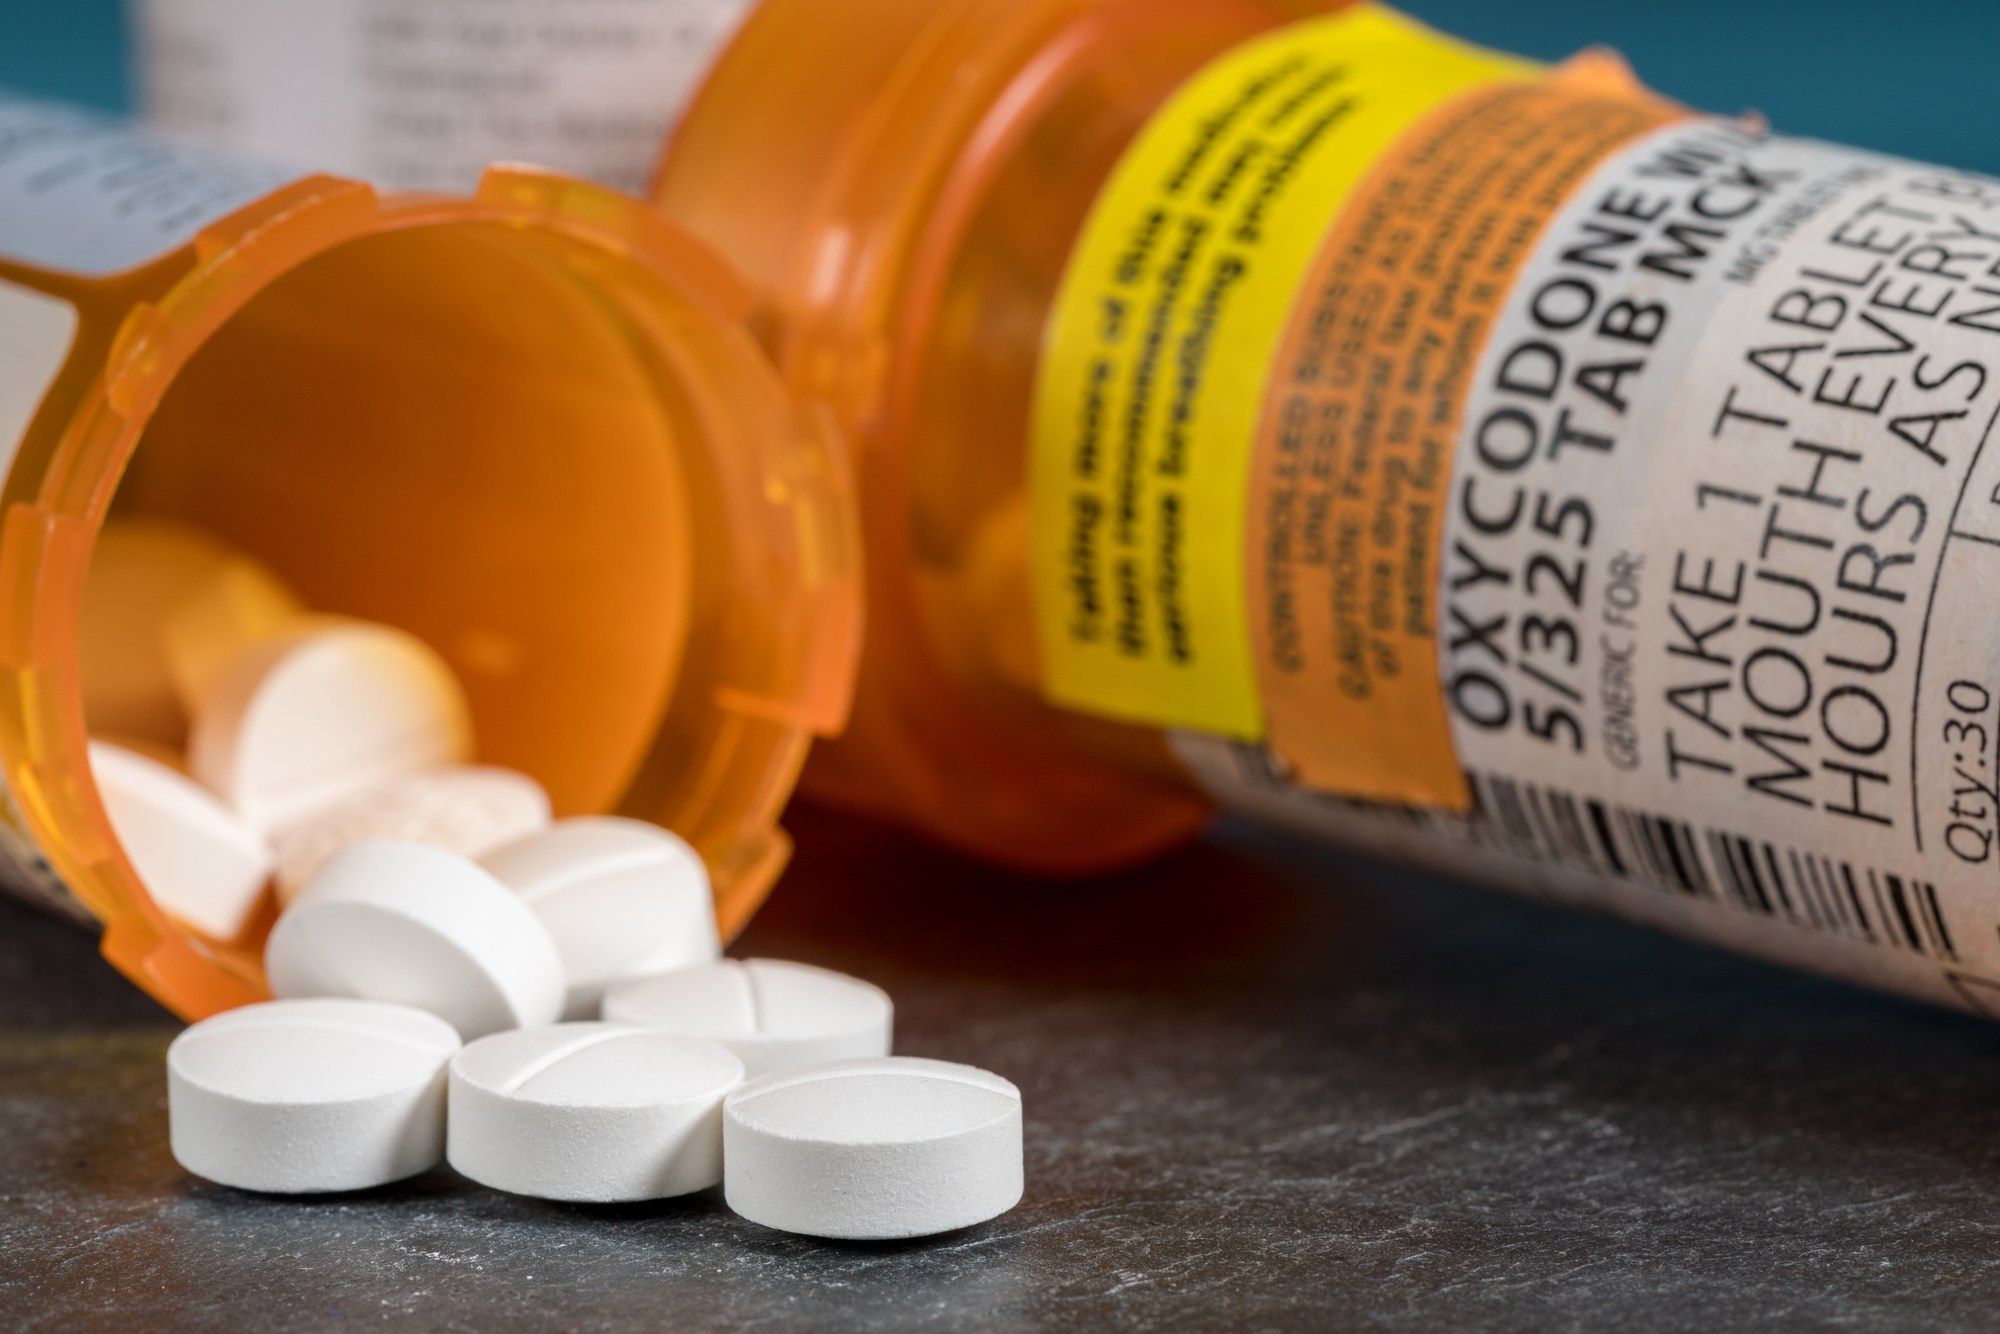 pills an dpill bottles regarding Canada provinces filing suit againt Purdue Pharma over opioid crisis